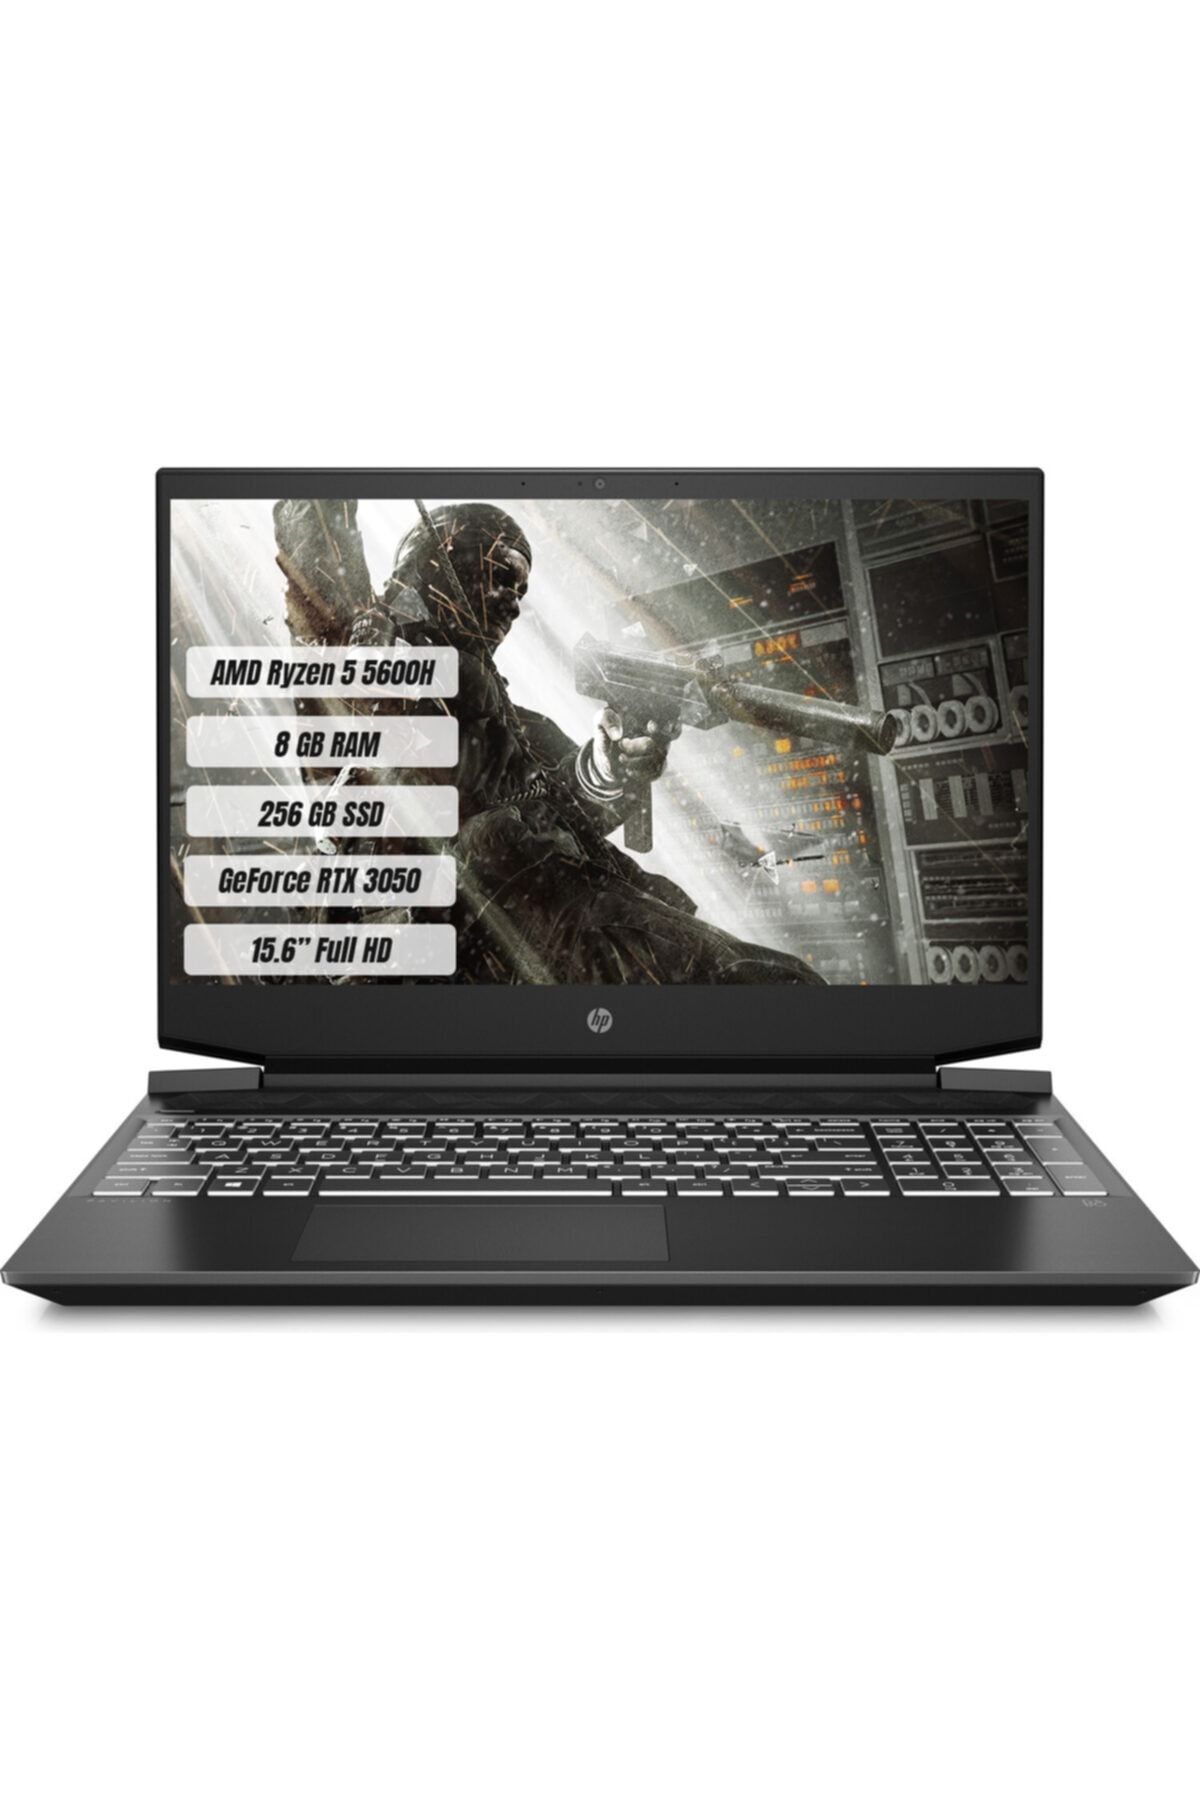 HP Pavilion Gaming Laptop 15-ec2023nt Amd Ryzen5 5600h 8 Gb 256 Gb Ssd Rtx 3050 Dos 15,6 Fhd 434l8ea